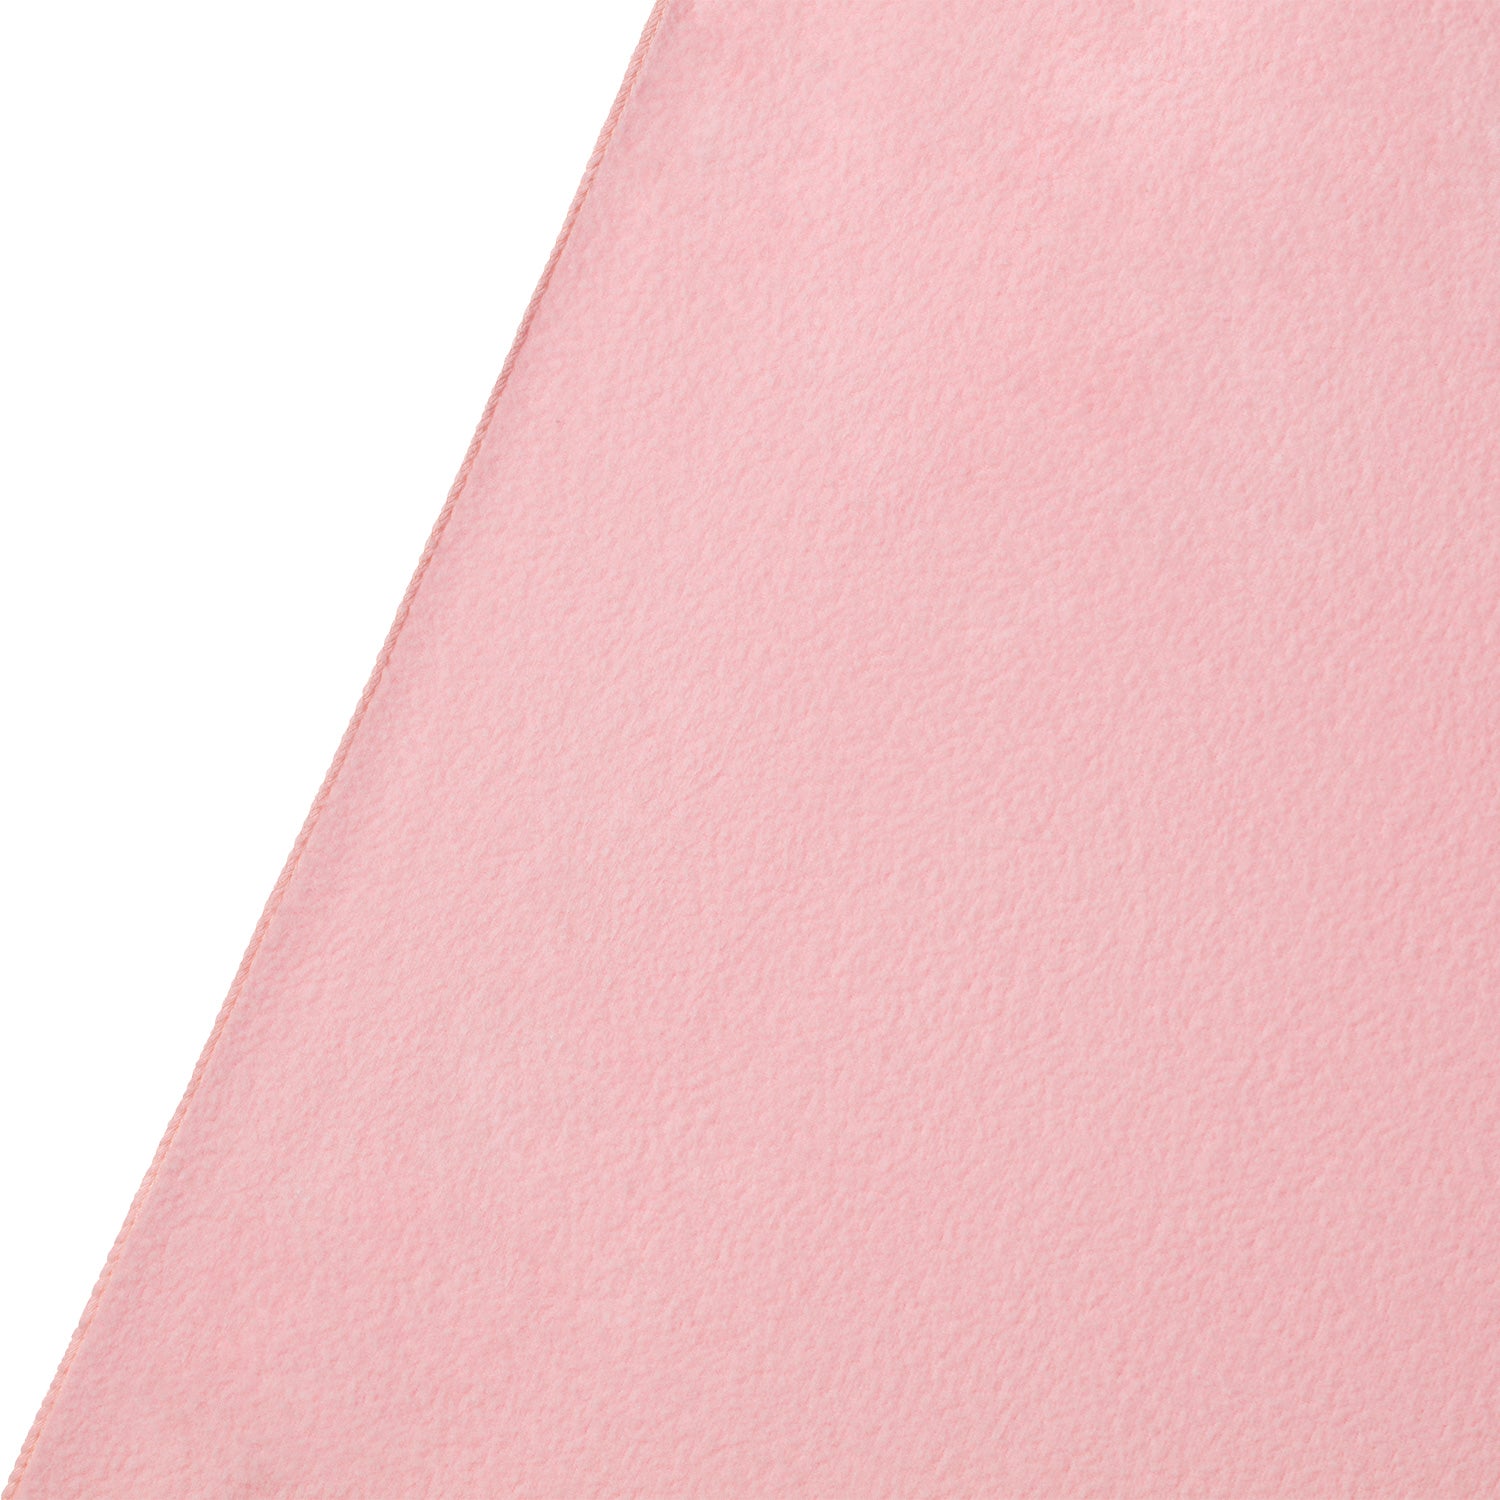 Wrinkle-Resistant Backdrop - Blush Pink (9' x 10')